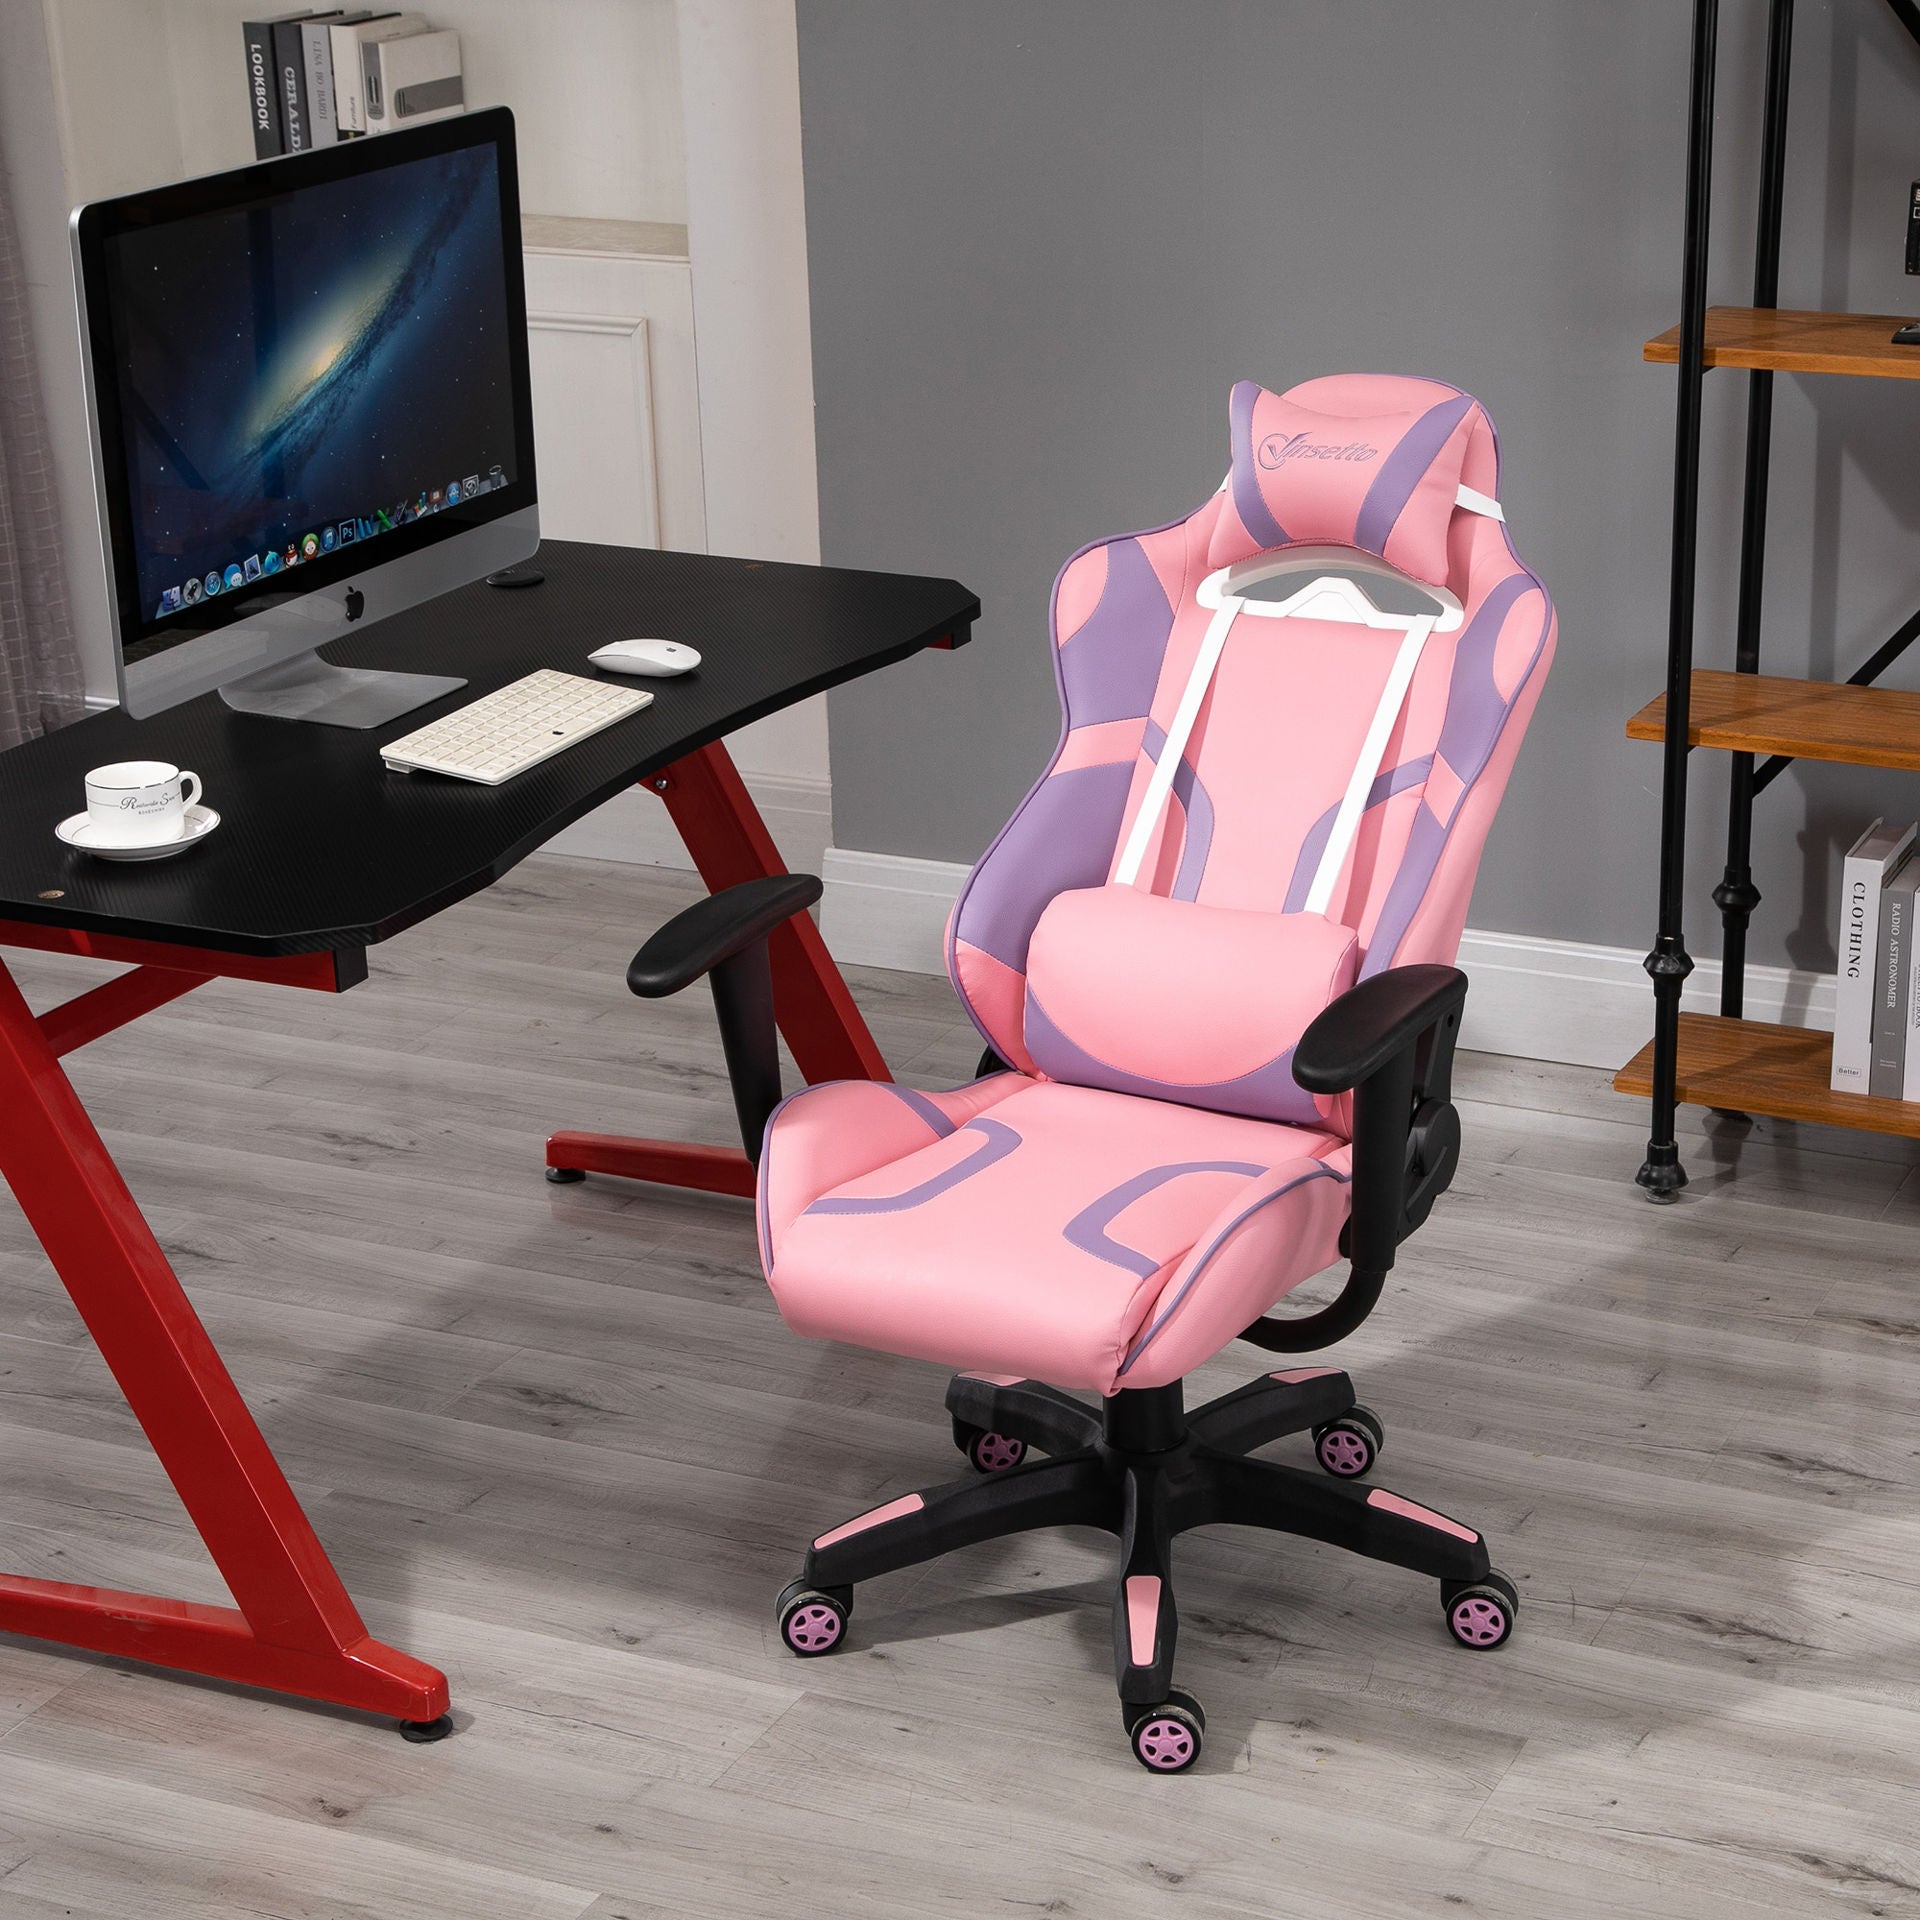 Nancy's Tacistal Gaming Chair - Pink, Purple - Foam, Nylon, Pvc - 27.16 cm x 22.04 cm x 49.4 cm